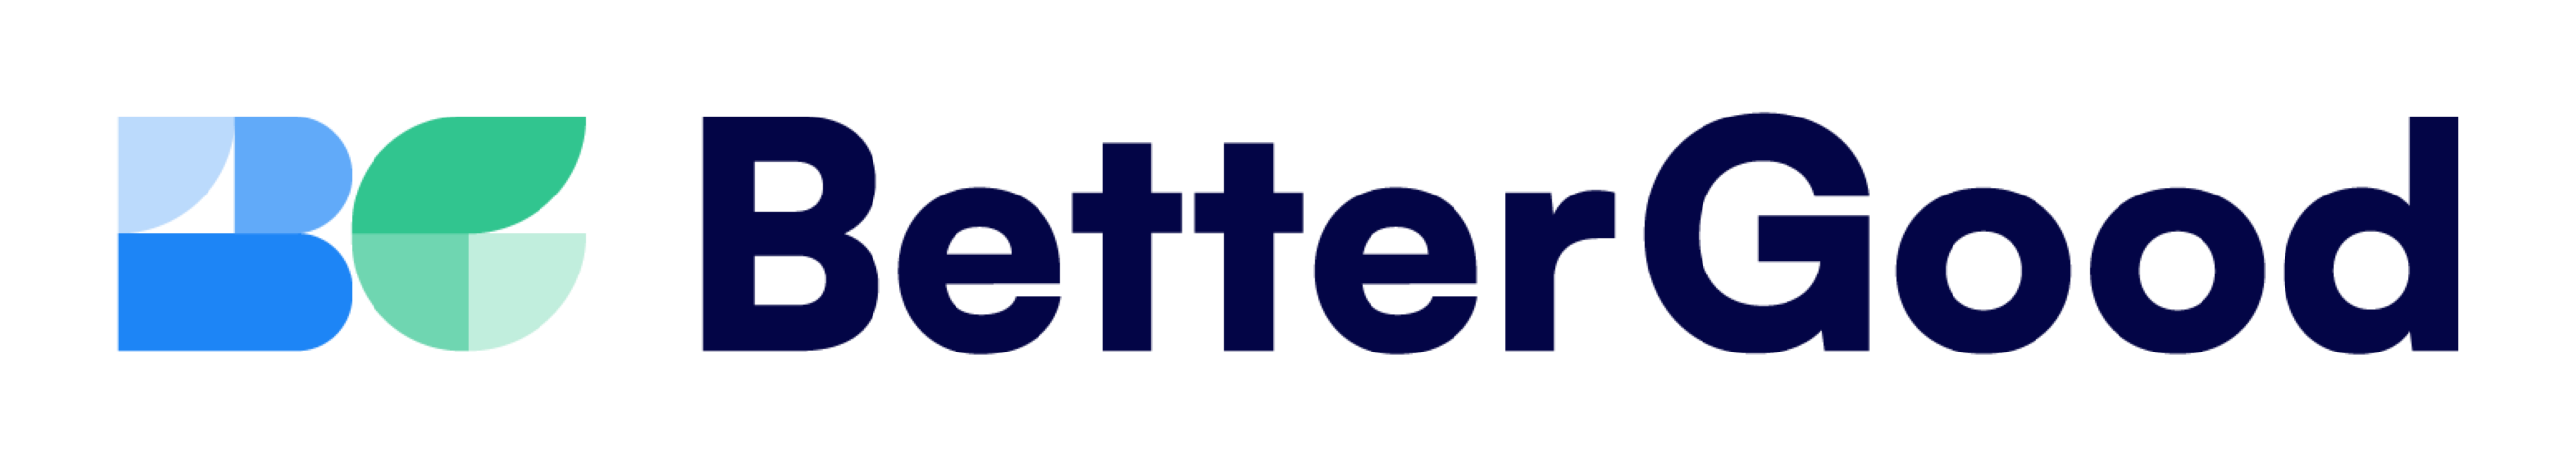 BetterGood logo